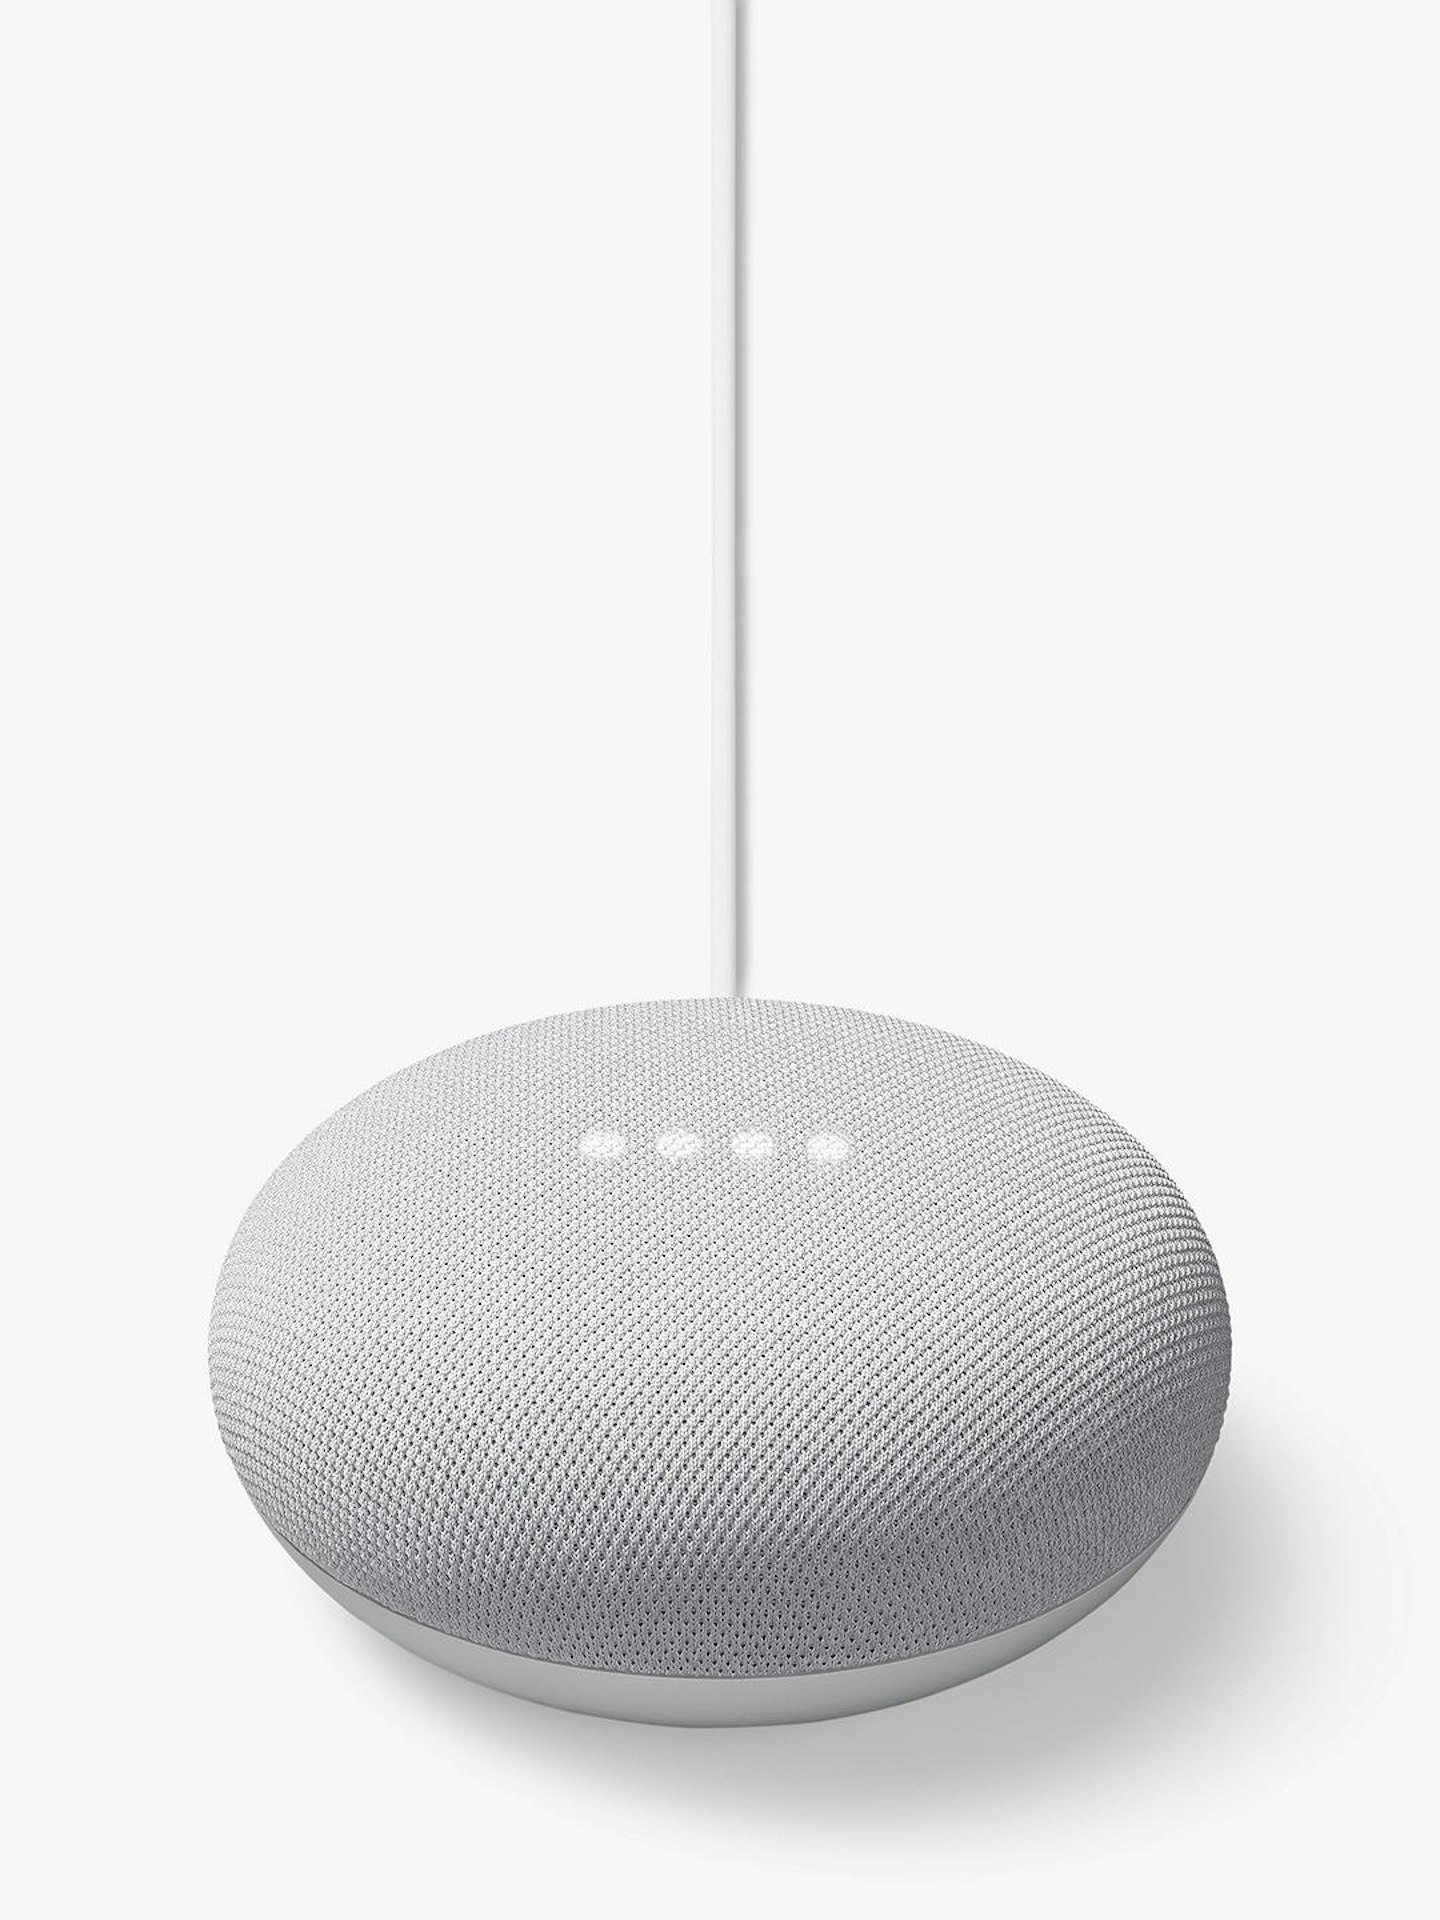 Google Nest Mini Hands-Free Smart Speaker, 2nd Gen, £49